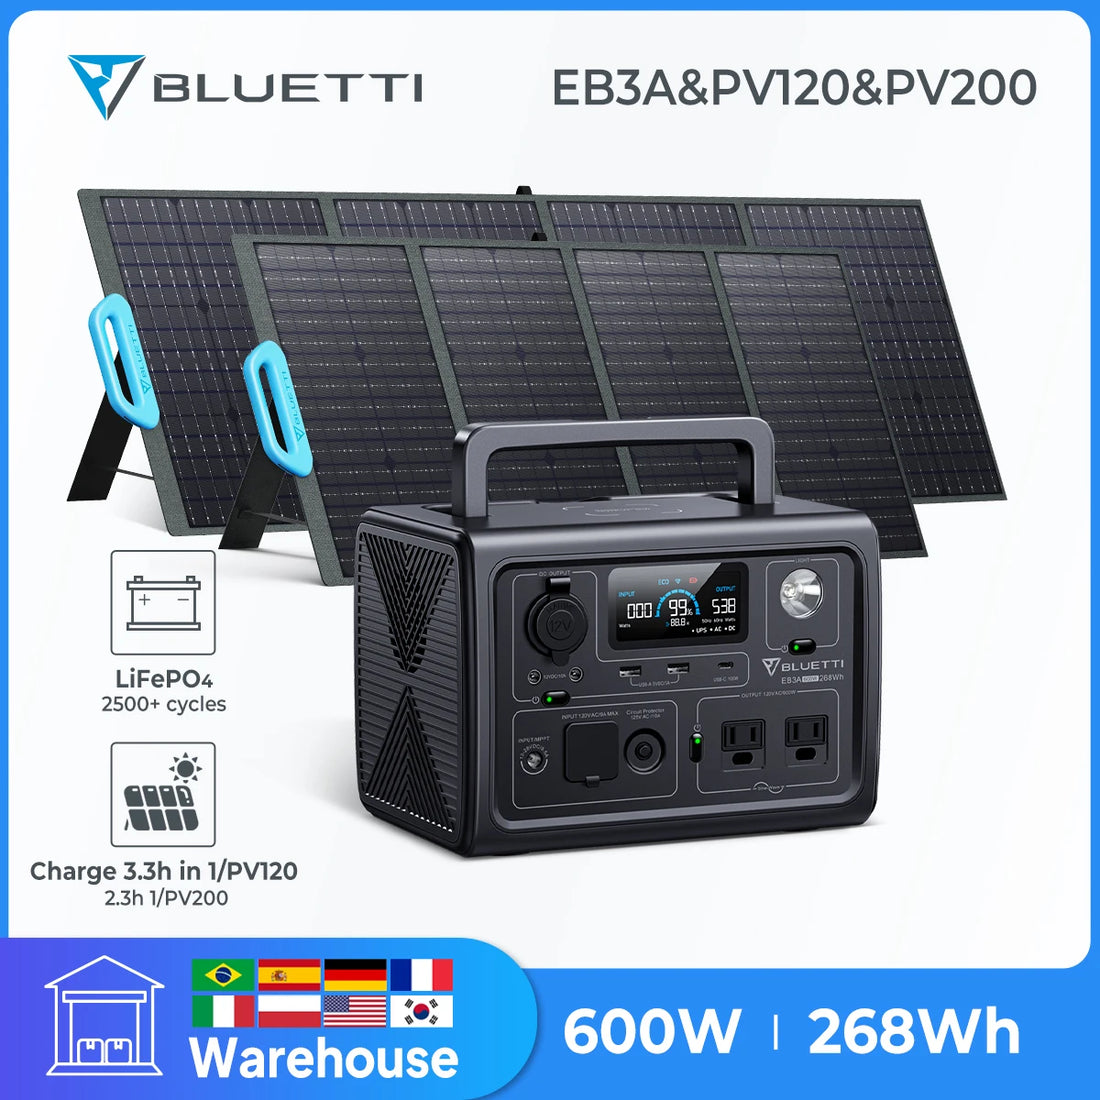 BLUETTI EB3A 600W Portable Power Station - Fozz&